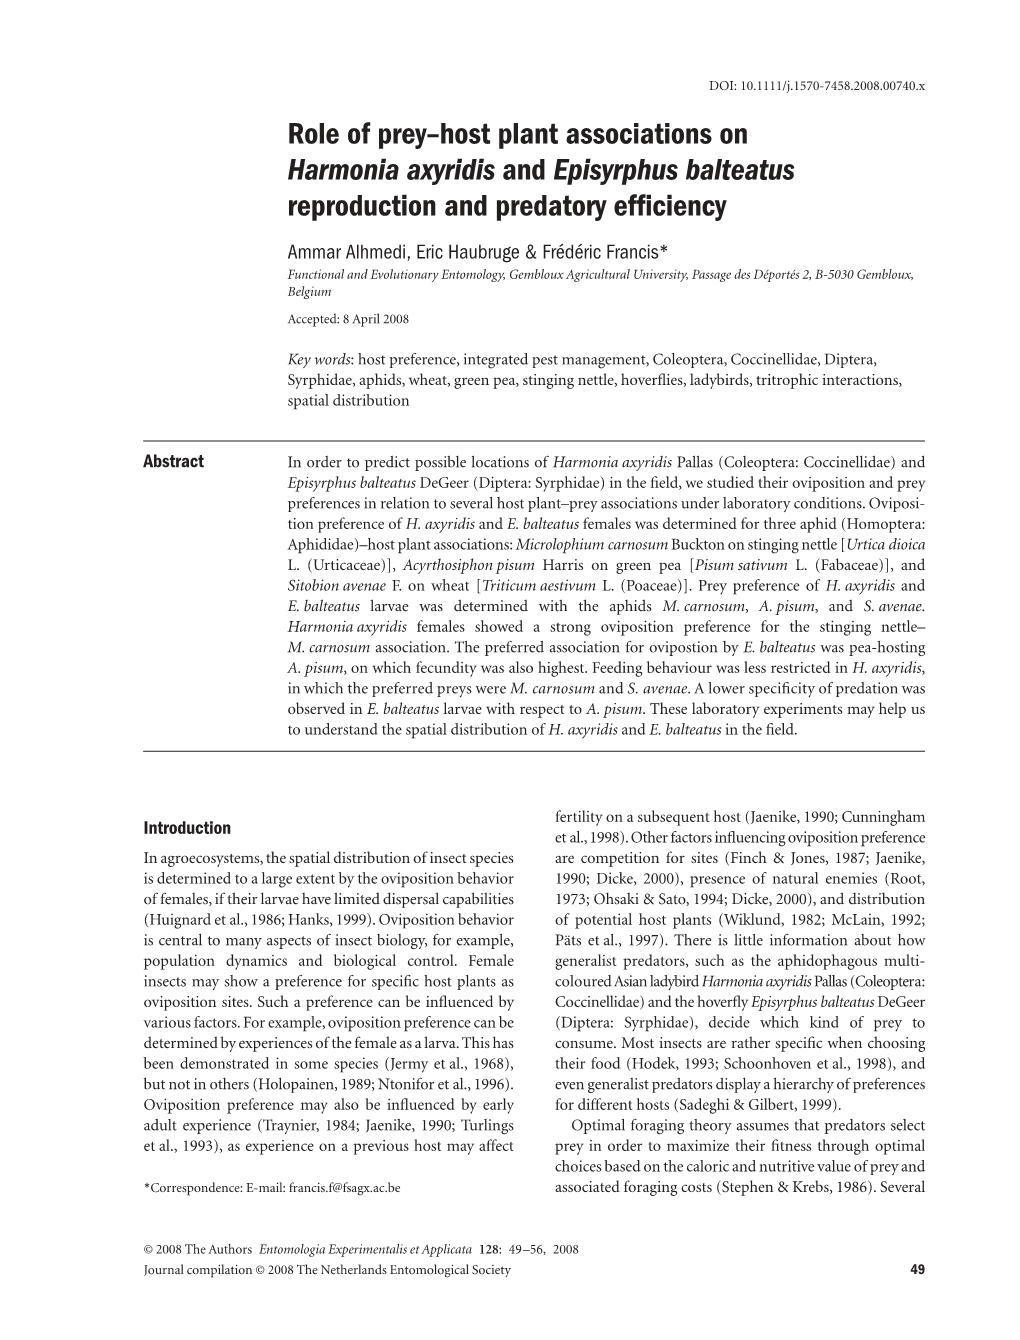 Role of Prey–Host Plant Associations on Harmonia Axyridis and Episyrphus Balteatus Reproduction and Predatory Efficiency